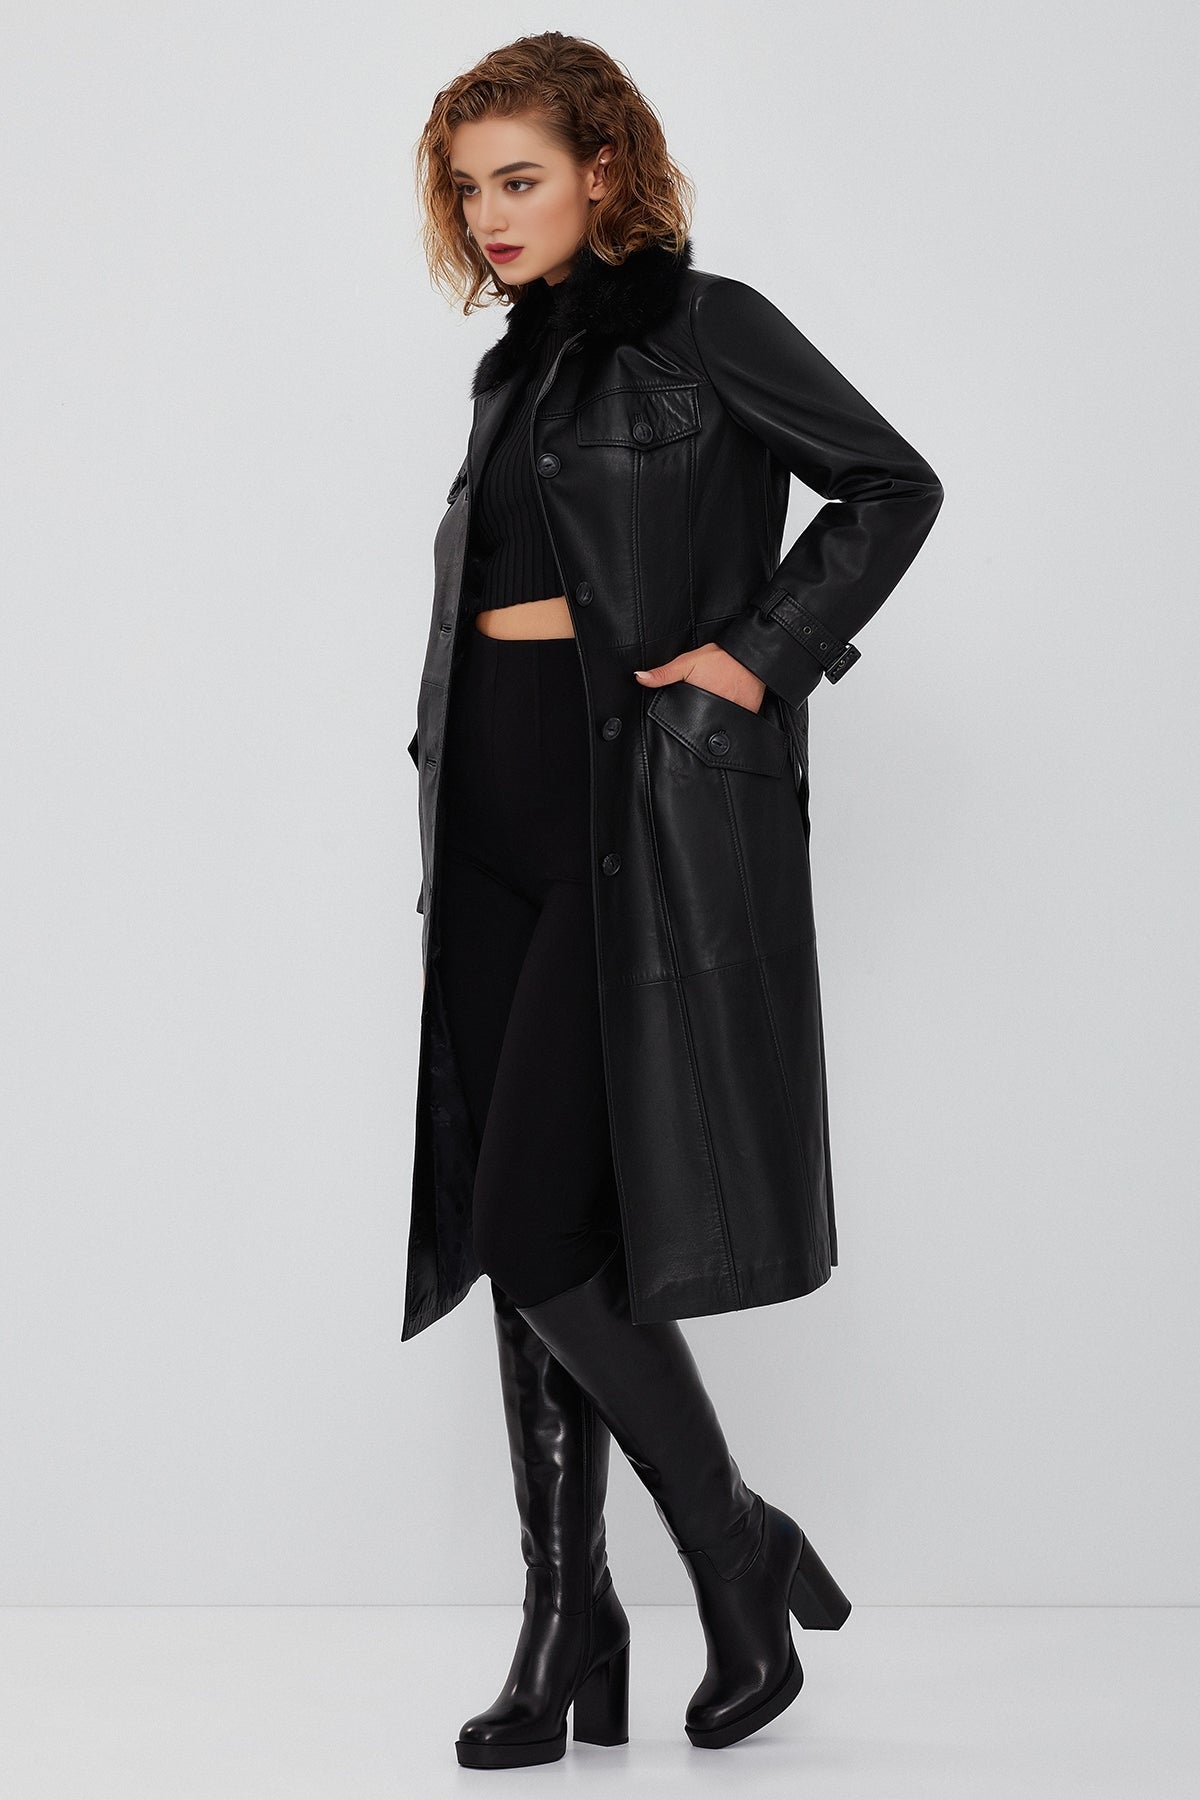 Fonda Women's Black Fur Leather Trench Coat